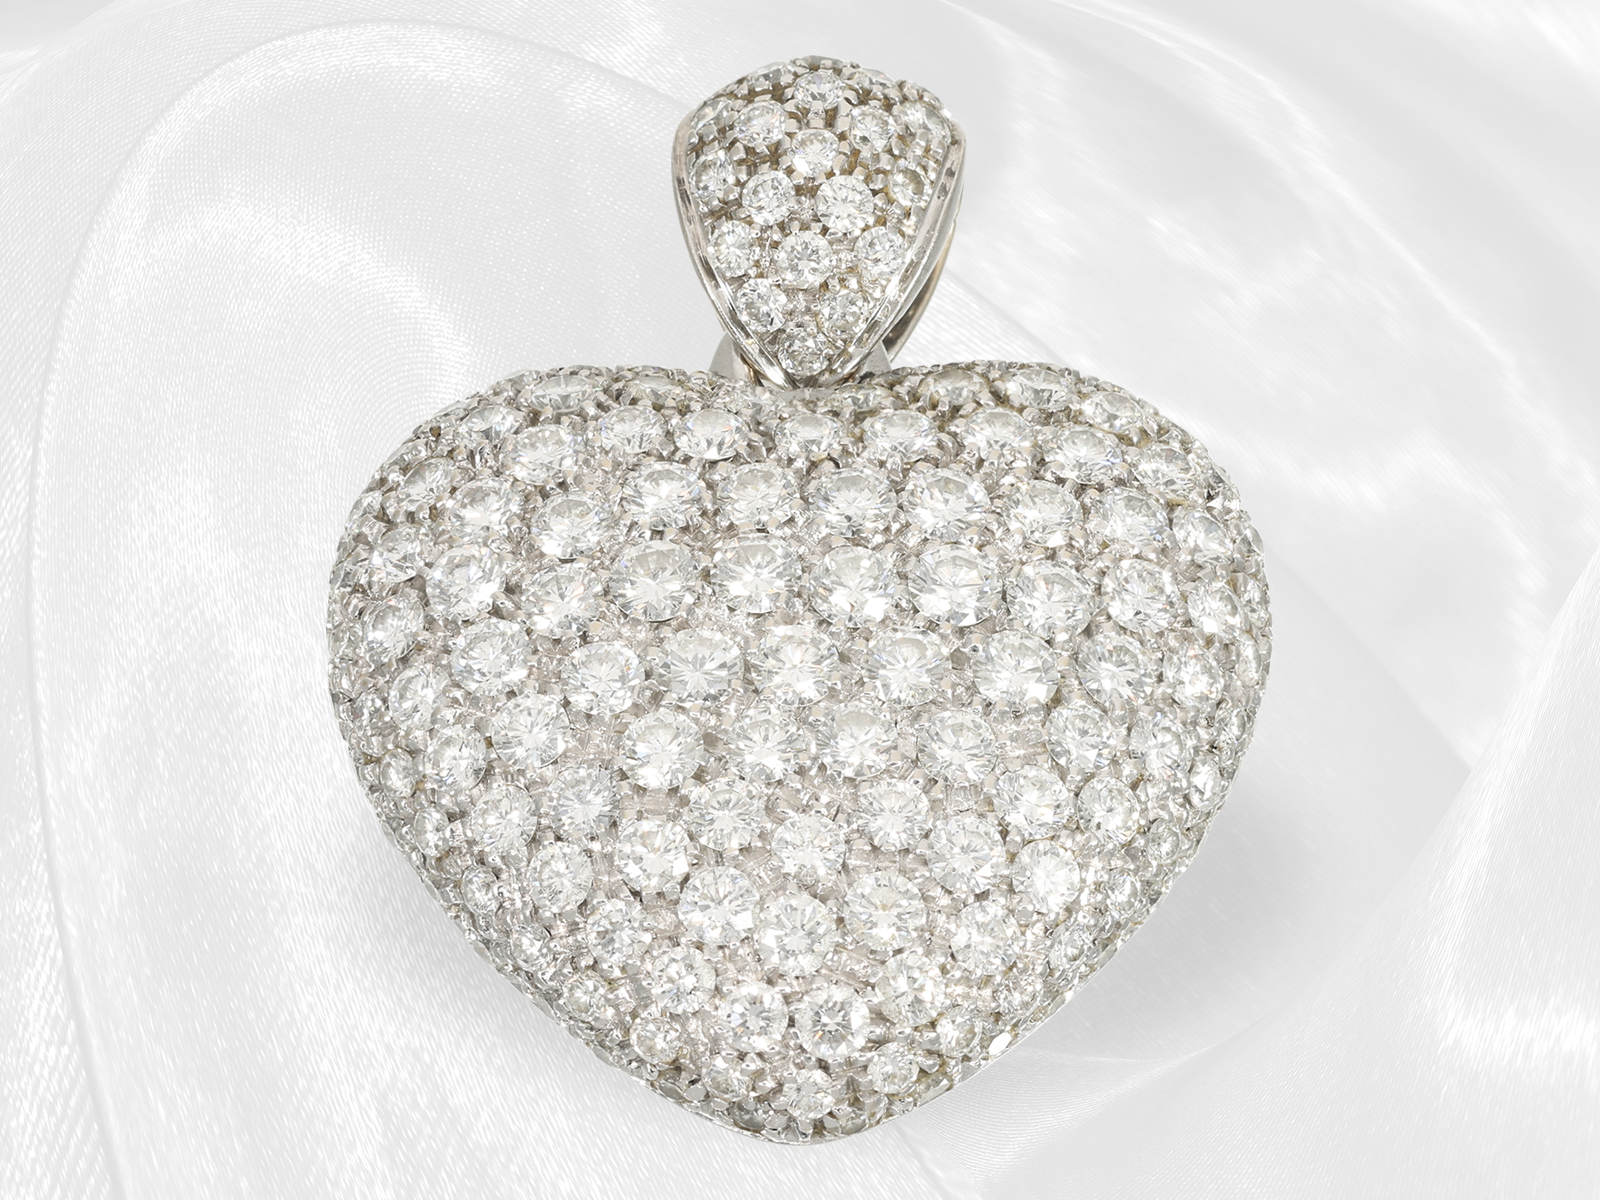 Italian richly set brilliant-cut diamond heart pendant, approx. 4ct brilliant-cut diamonds - Image 3 of 8